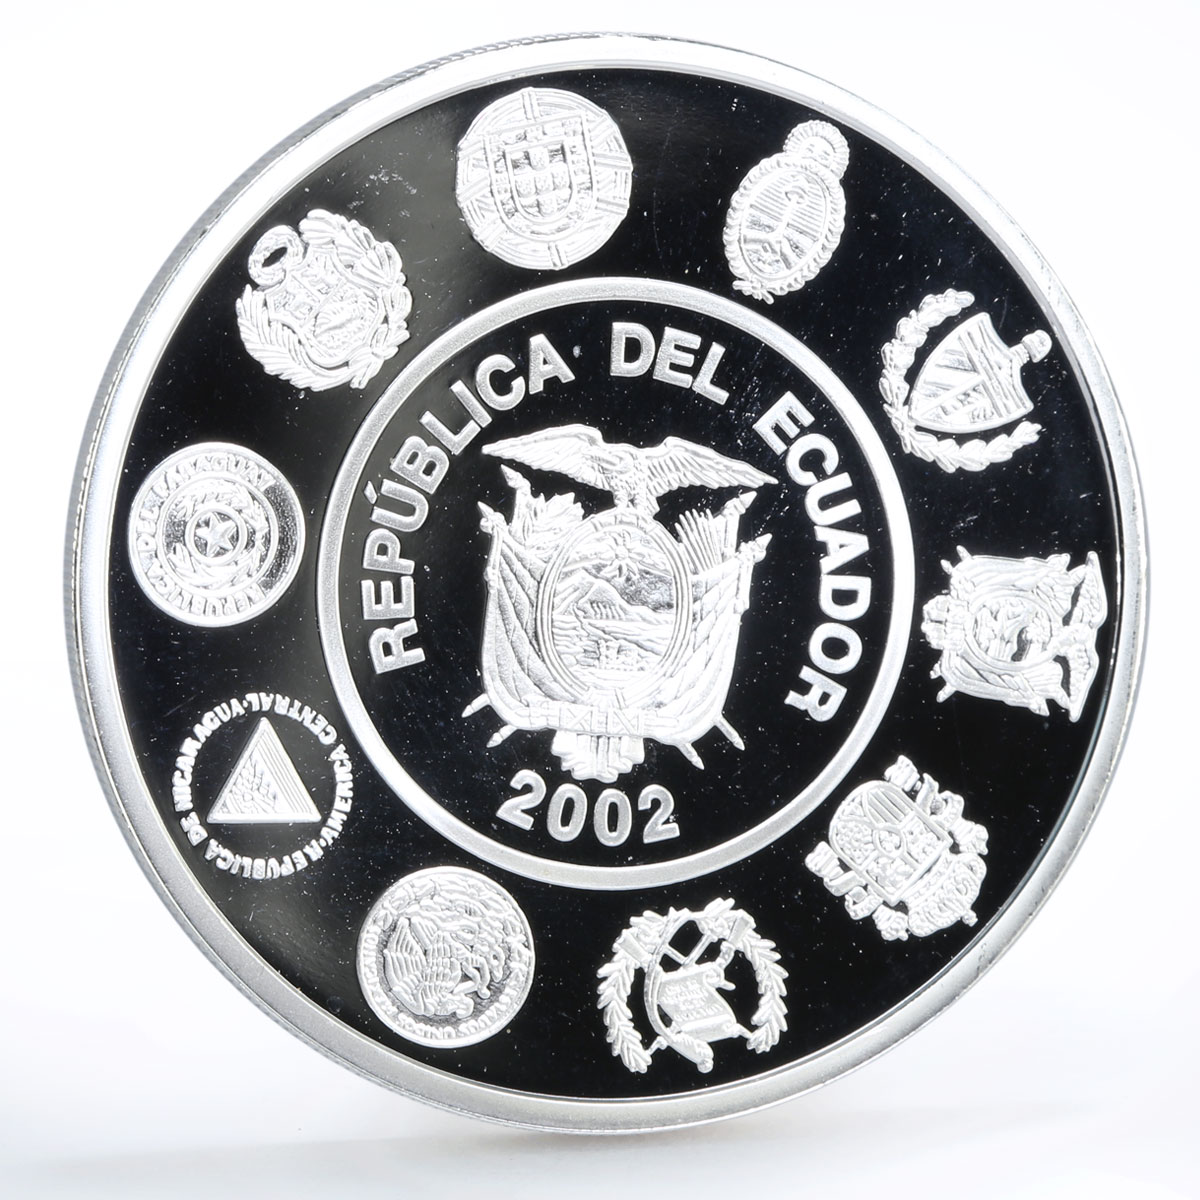 Ecuador 25000 sucres Balsawood Sailing Raft Ship proof silver coin 2002